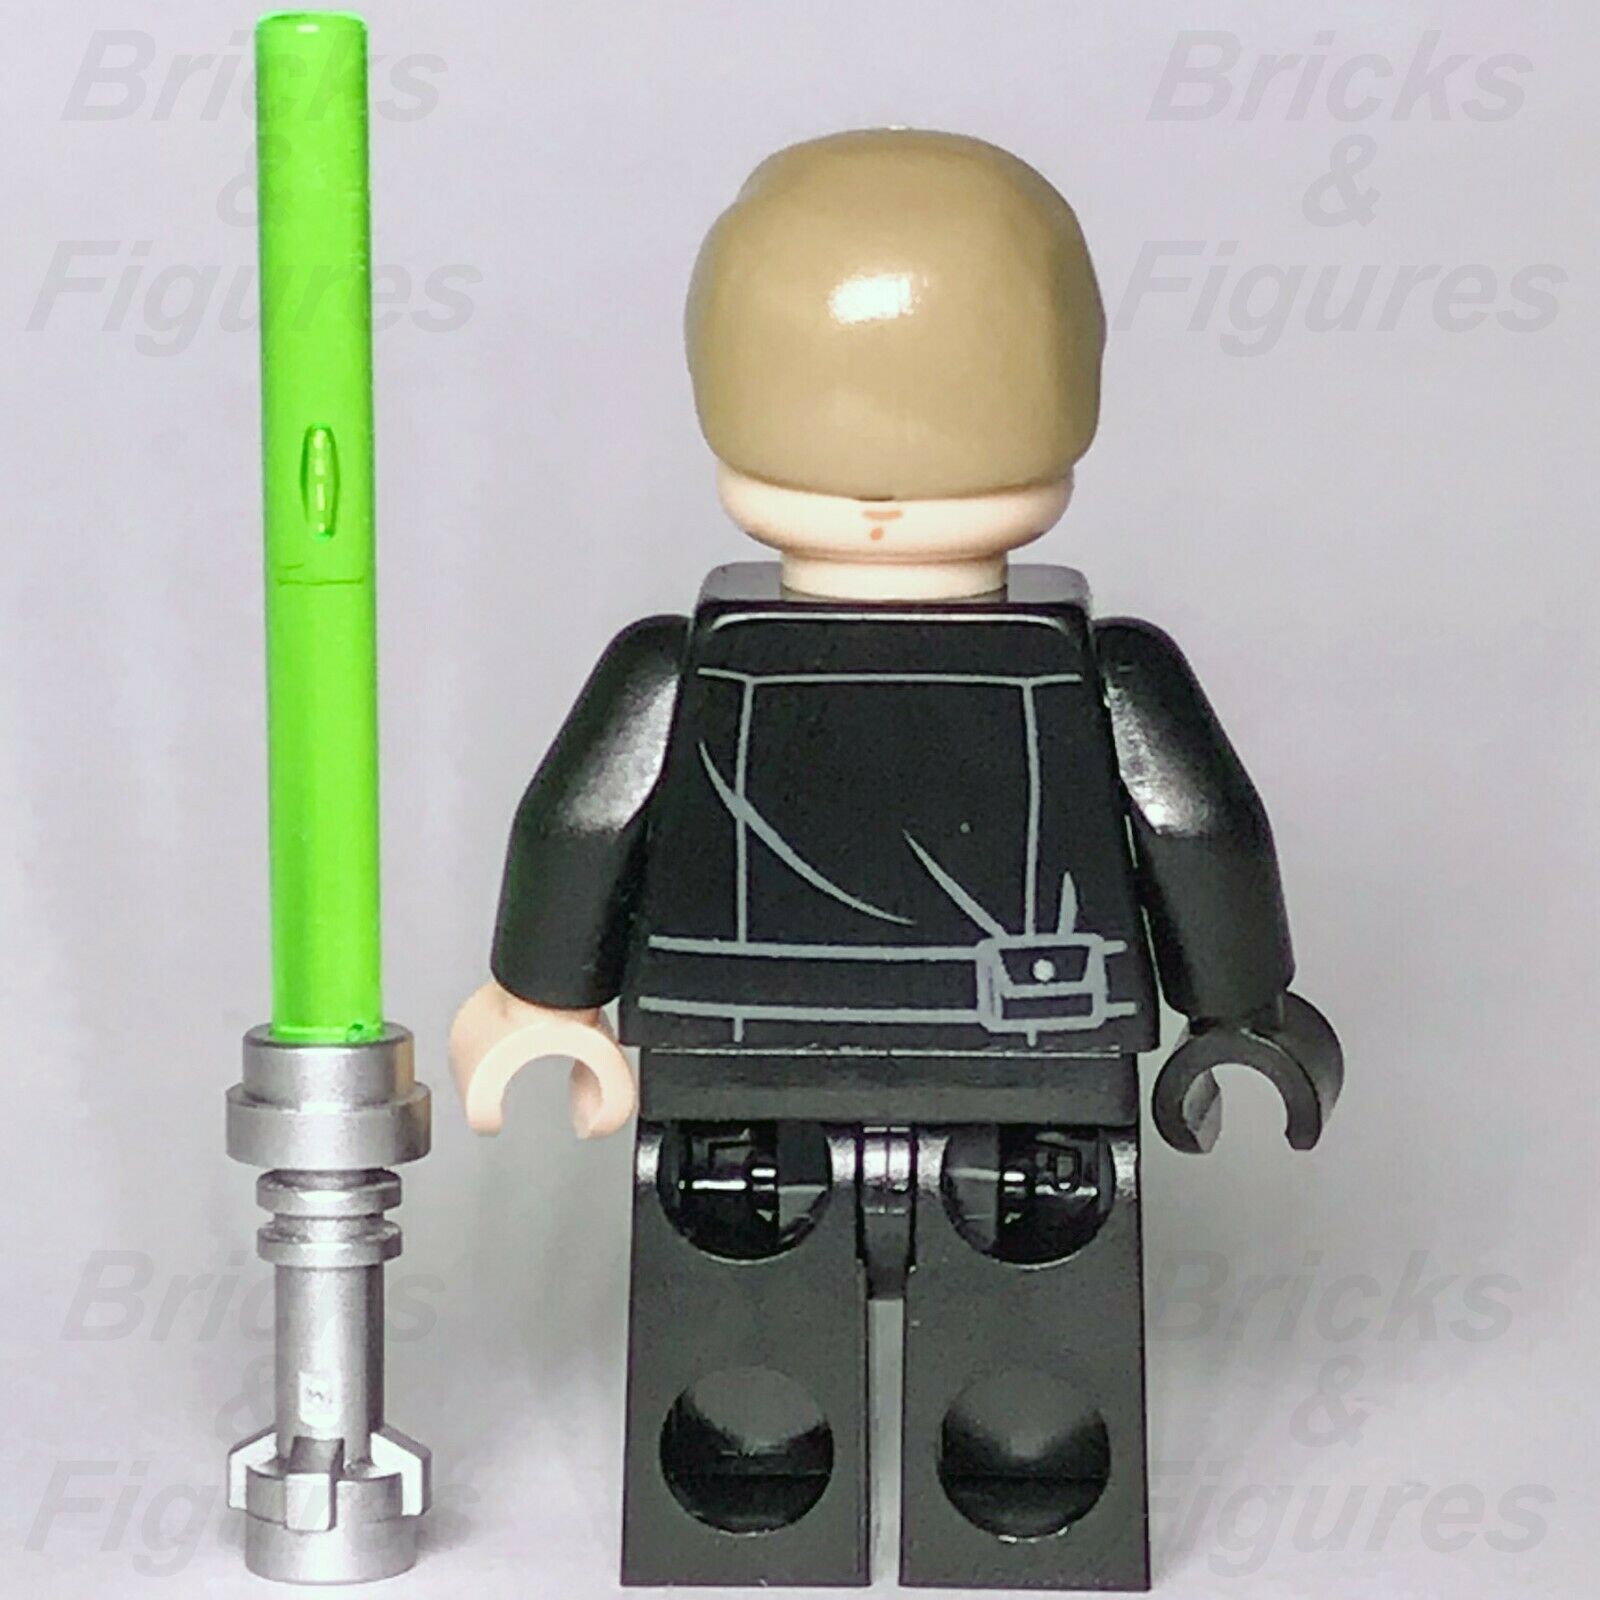 New Star Wars LEGO Luke Skywalker Jedi Master Endor Minifigure 10236 - Bricks & Figures